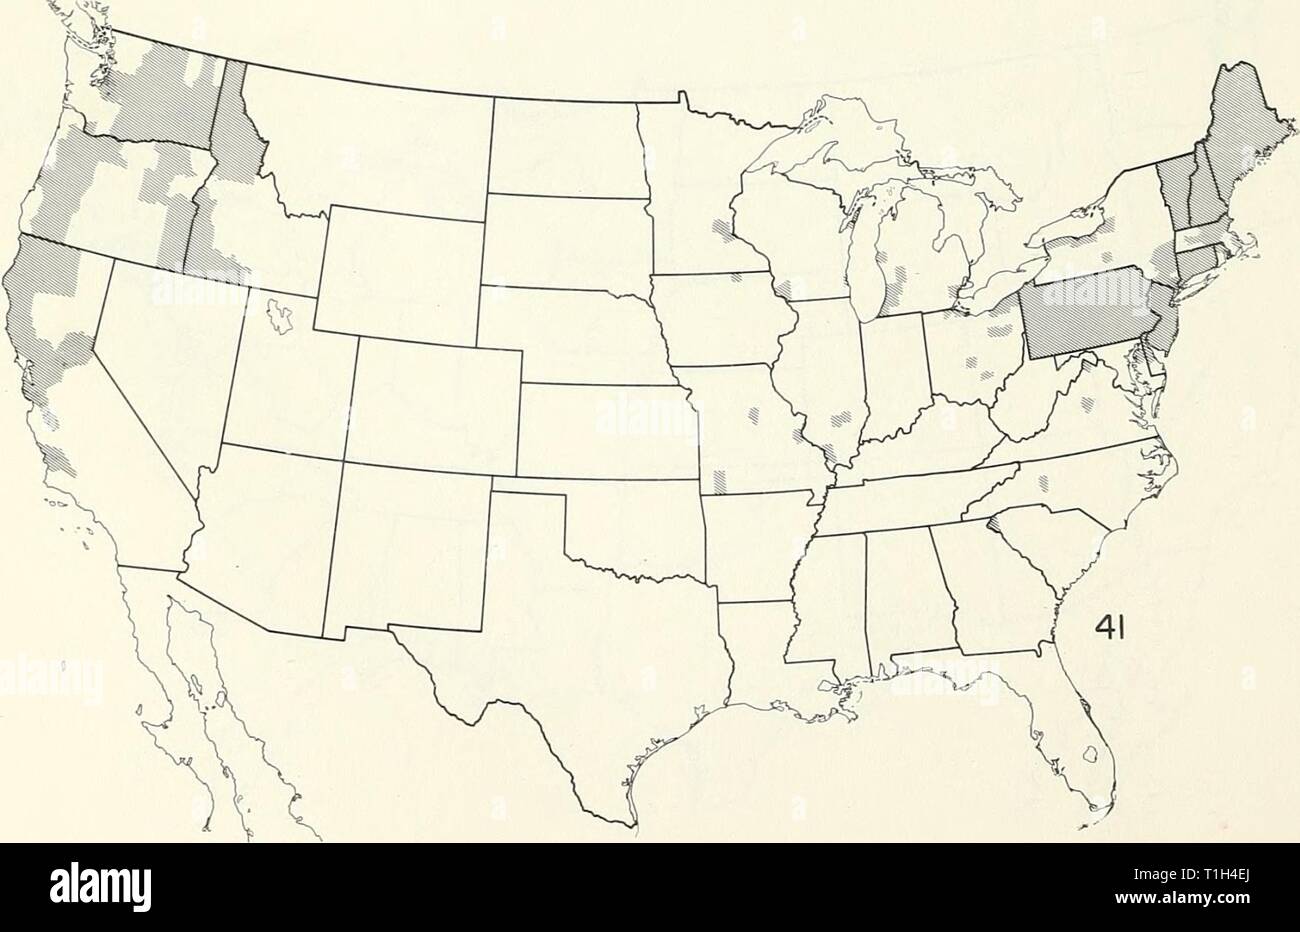 Distribution maps of some insect Distribution maps of some insect pests in the United States  distributionmaps00unit Year: 1959  Psylla pyricola (pear psylla) Stock Photo